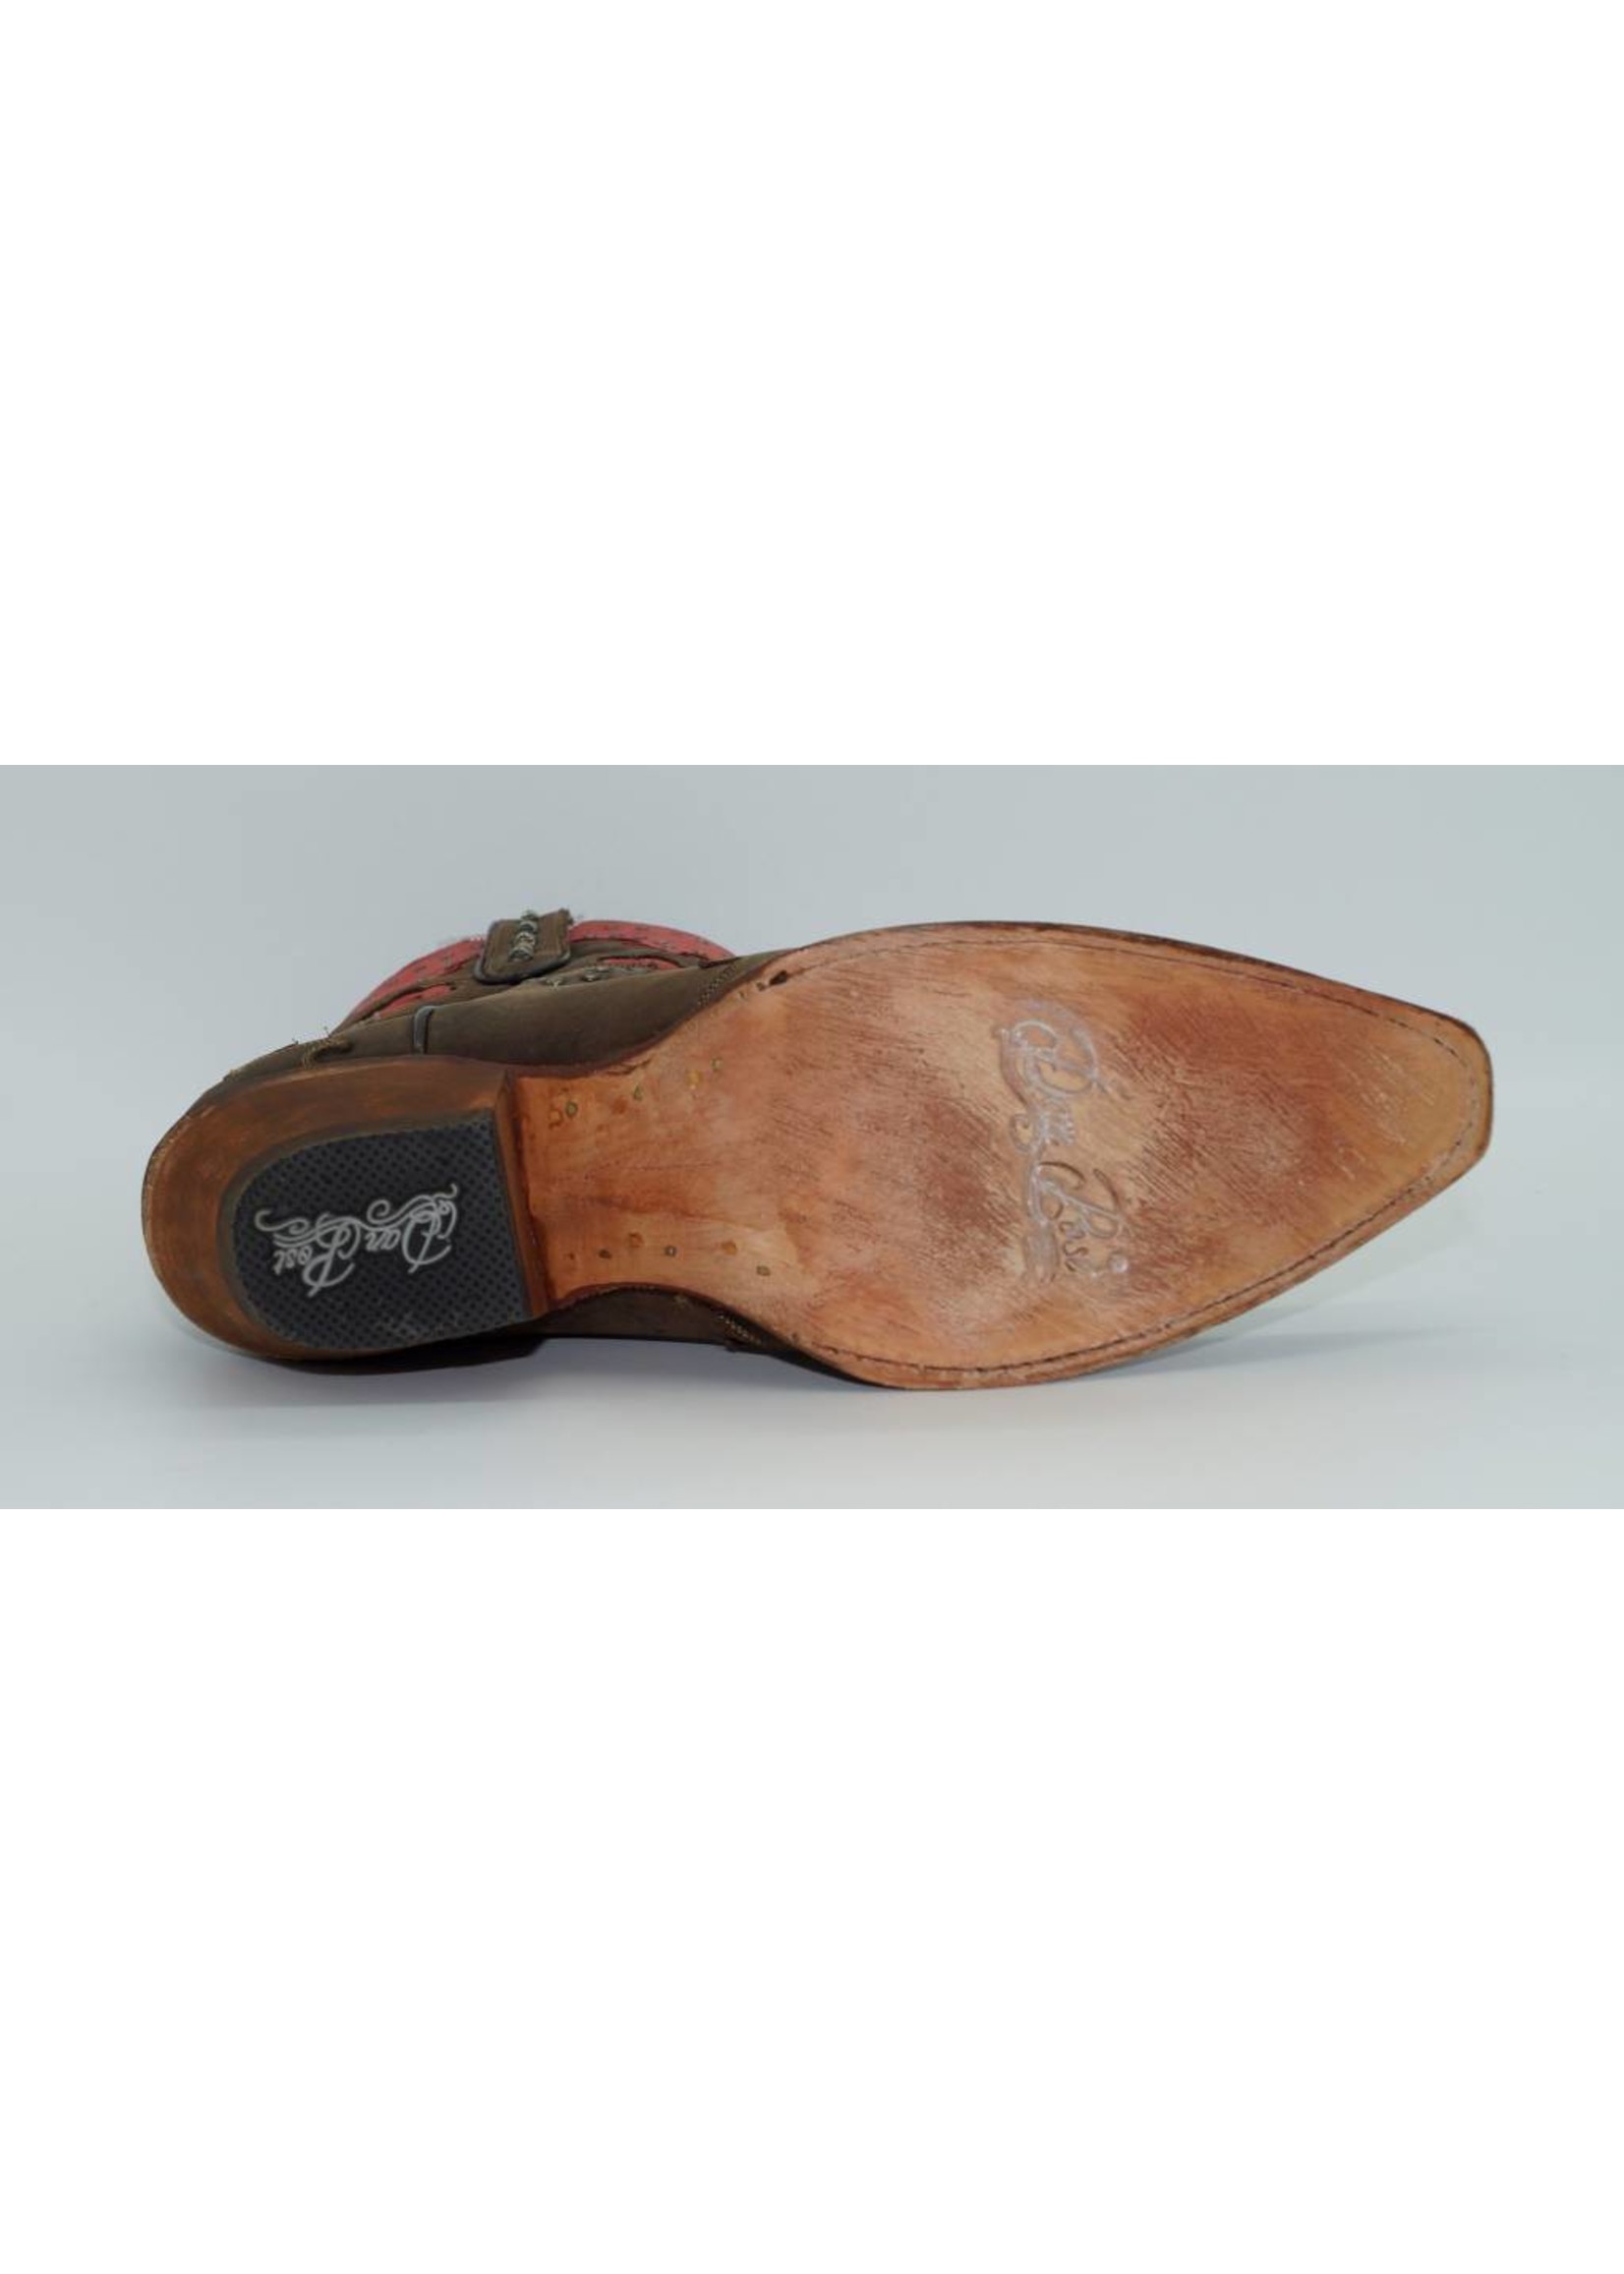 Dan Post Women's 11" Wild Bird Leather Boots Chocolate/Red DP3514